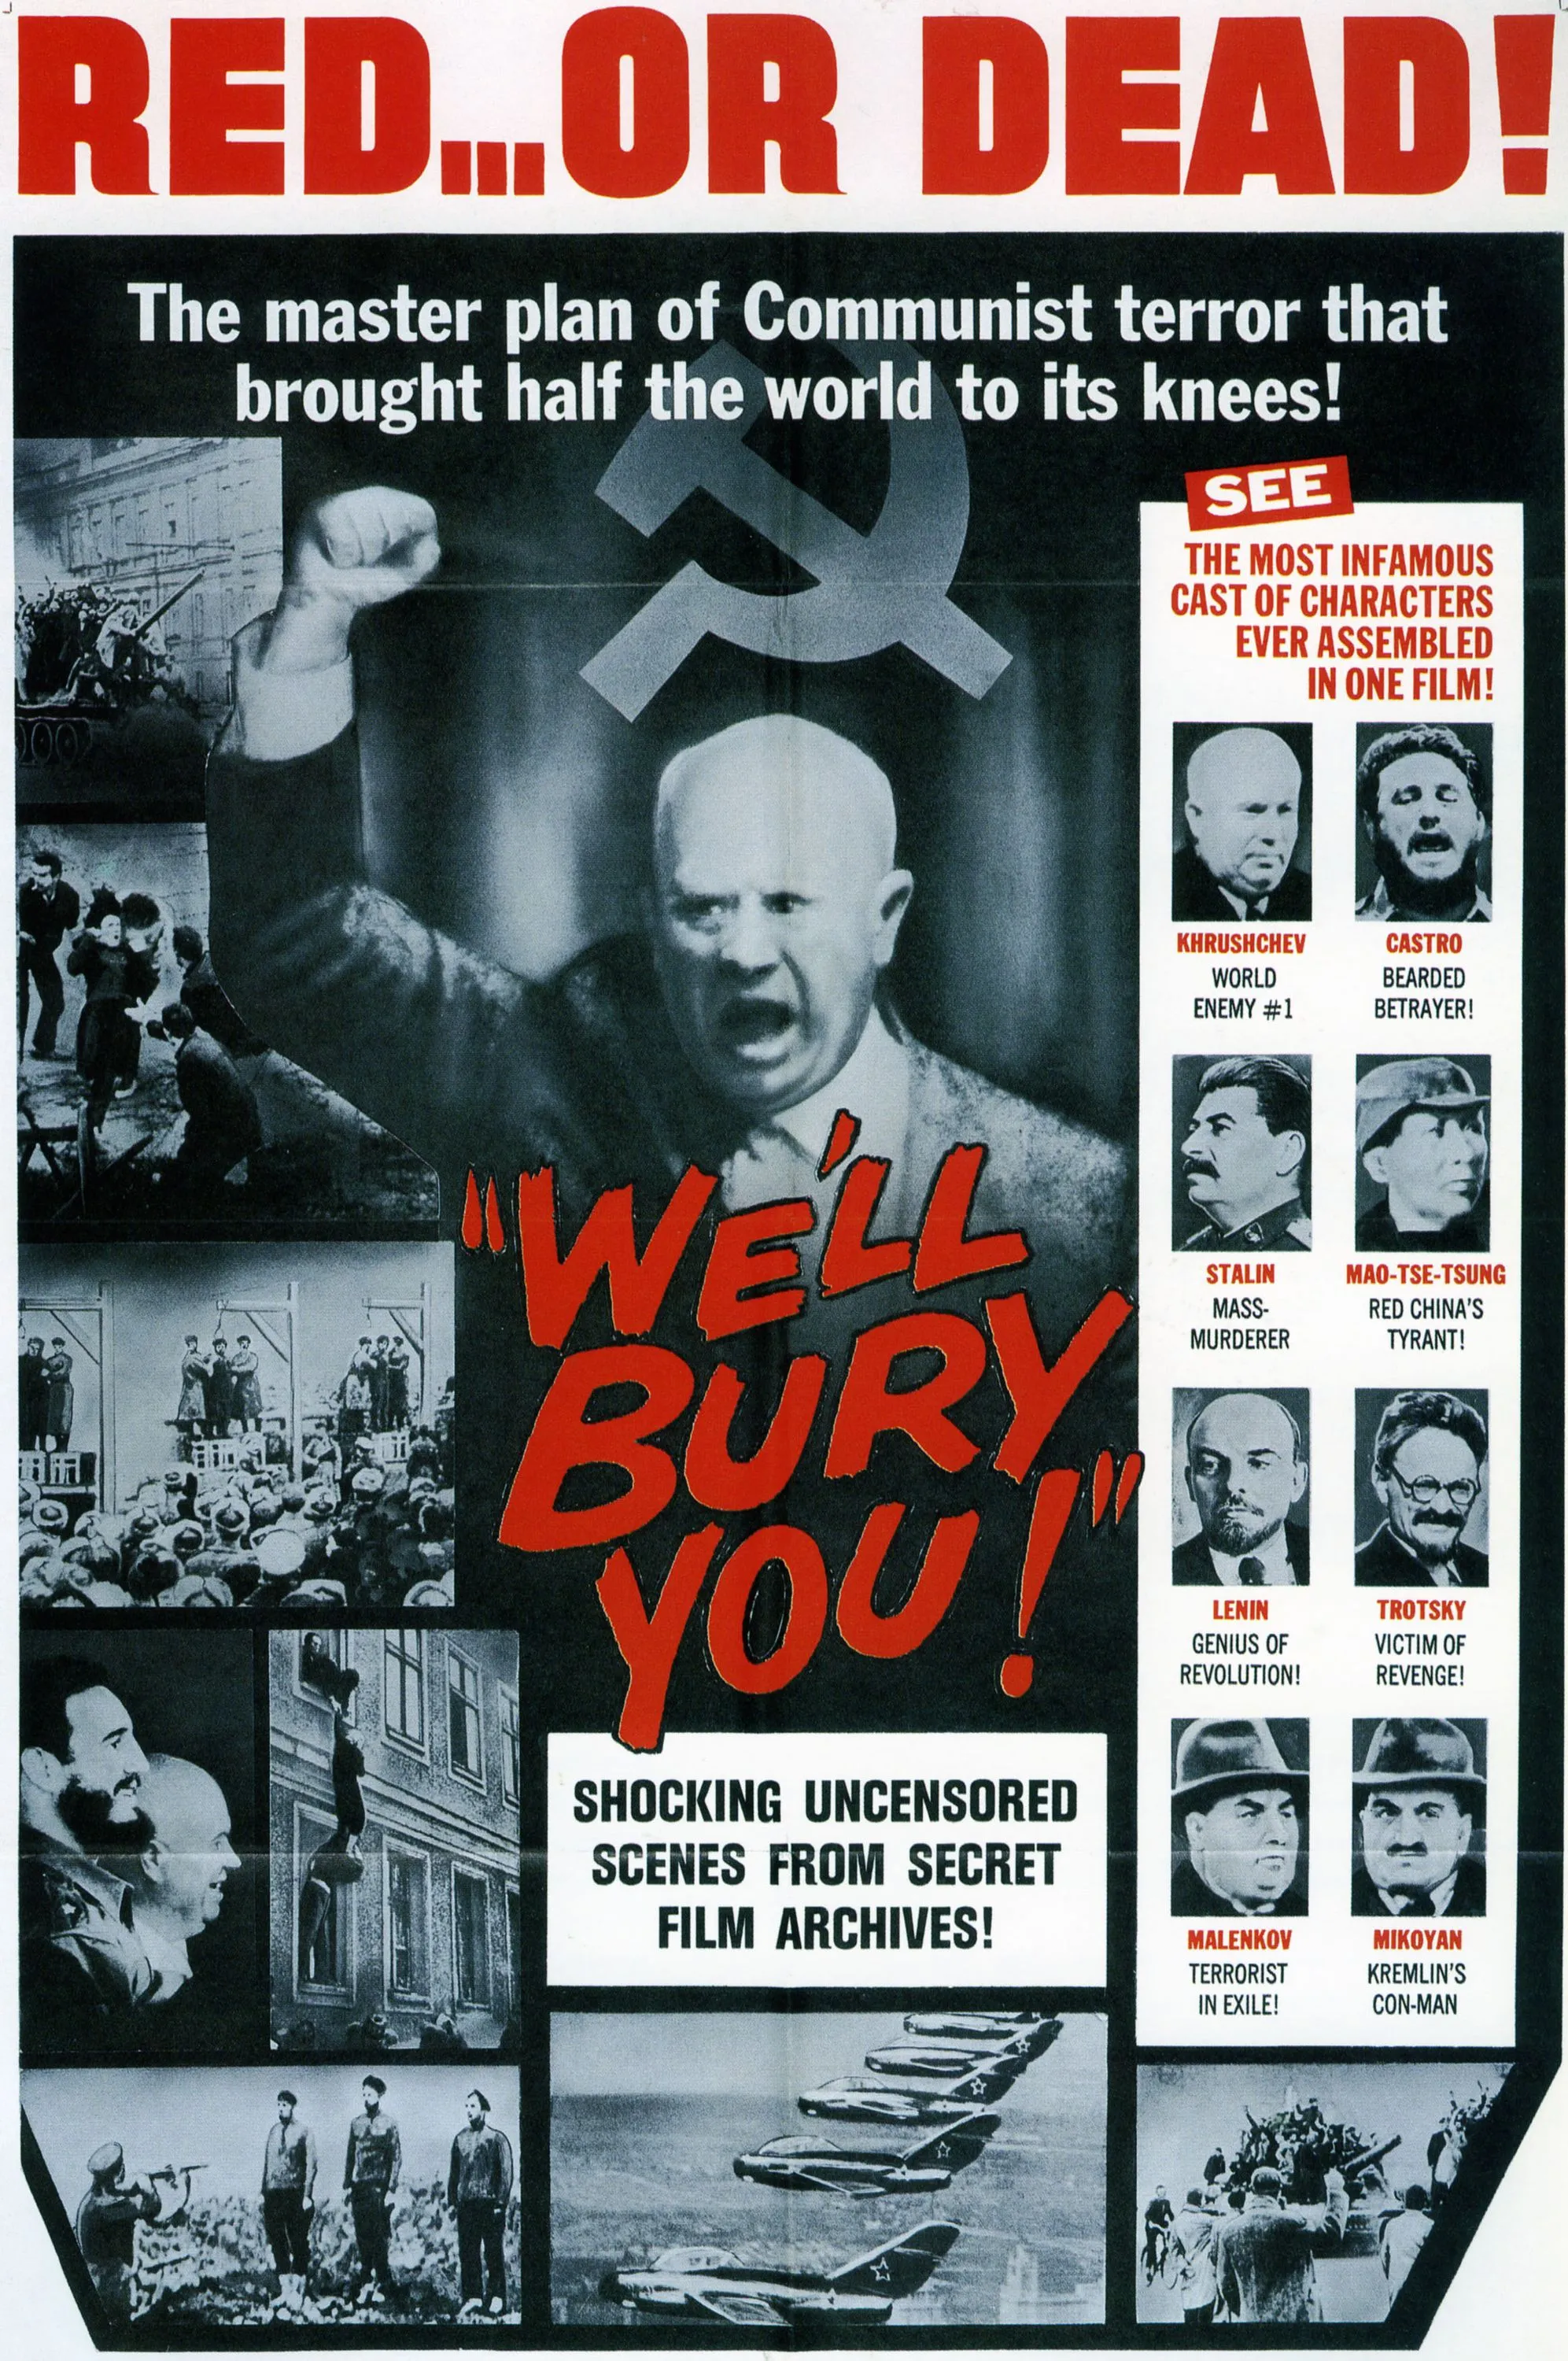 Affiche du film de propagande américain anticommuniste « We will bury you », 1962